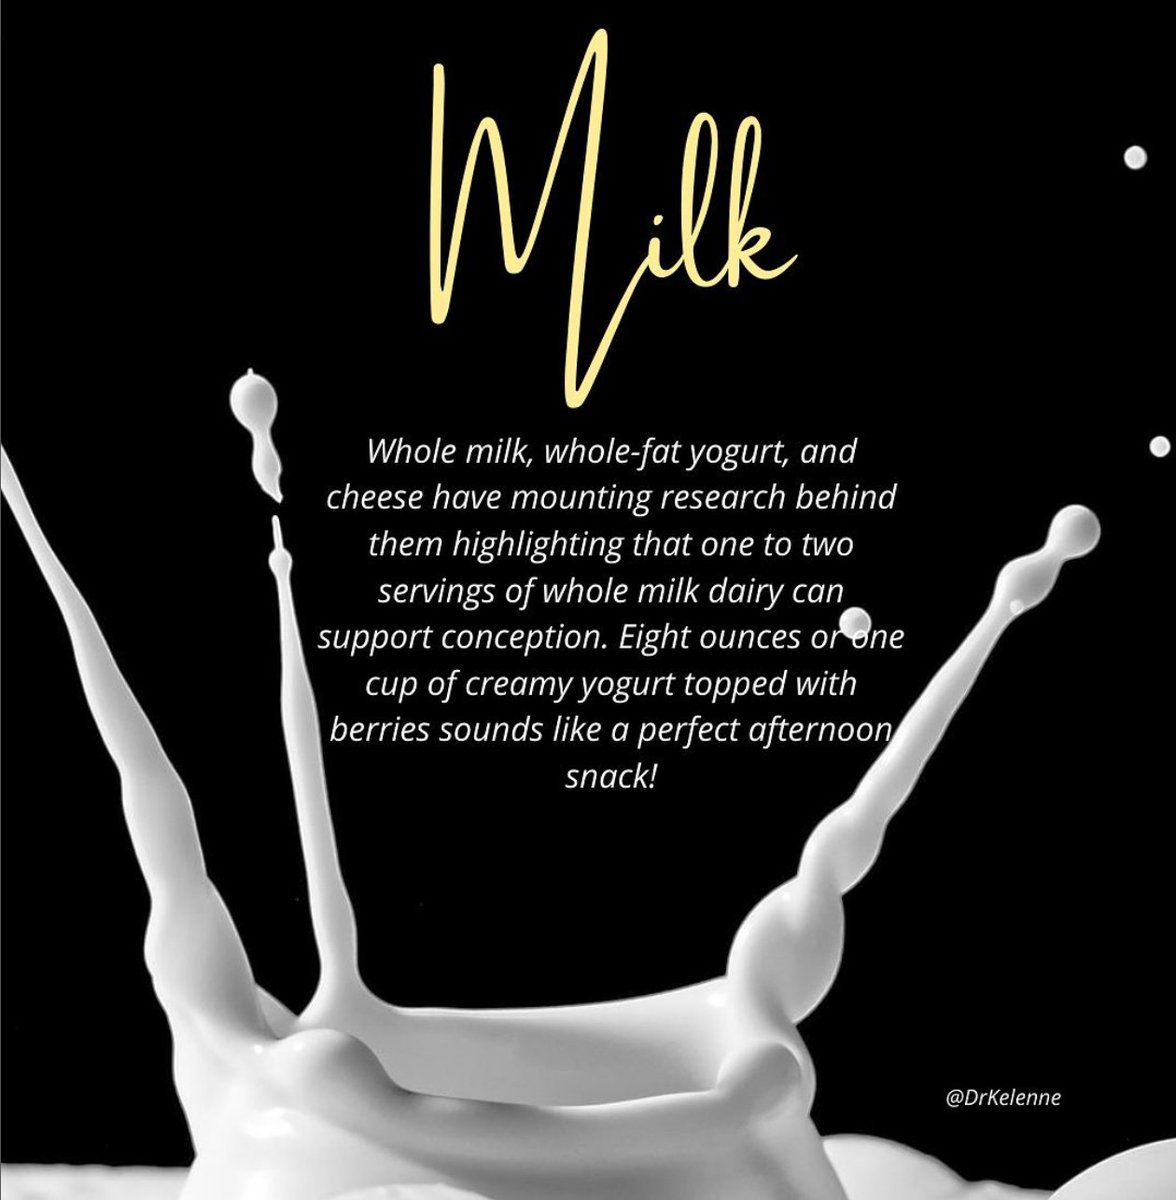 RT @DrKelenne: Milk for a healthy for the body overall. #womenshealth #breastfeeding #irie #familymedicine #singleparent #singlemoms #functionalmedicine #blackdoctor #telemedicine #yourcaribbeandoctor 🇹🇹🇻🇨🇵🇷🇦🇬🇧🇸🇧🇧🇧🇷🇨🇦🇫🇰🇬🇩🇬🇾🇯🇲🇭🇹🇱🇨🇰🇳